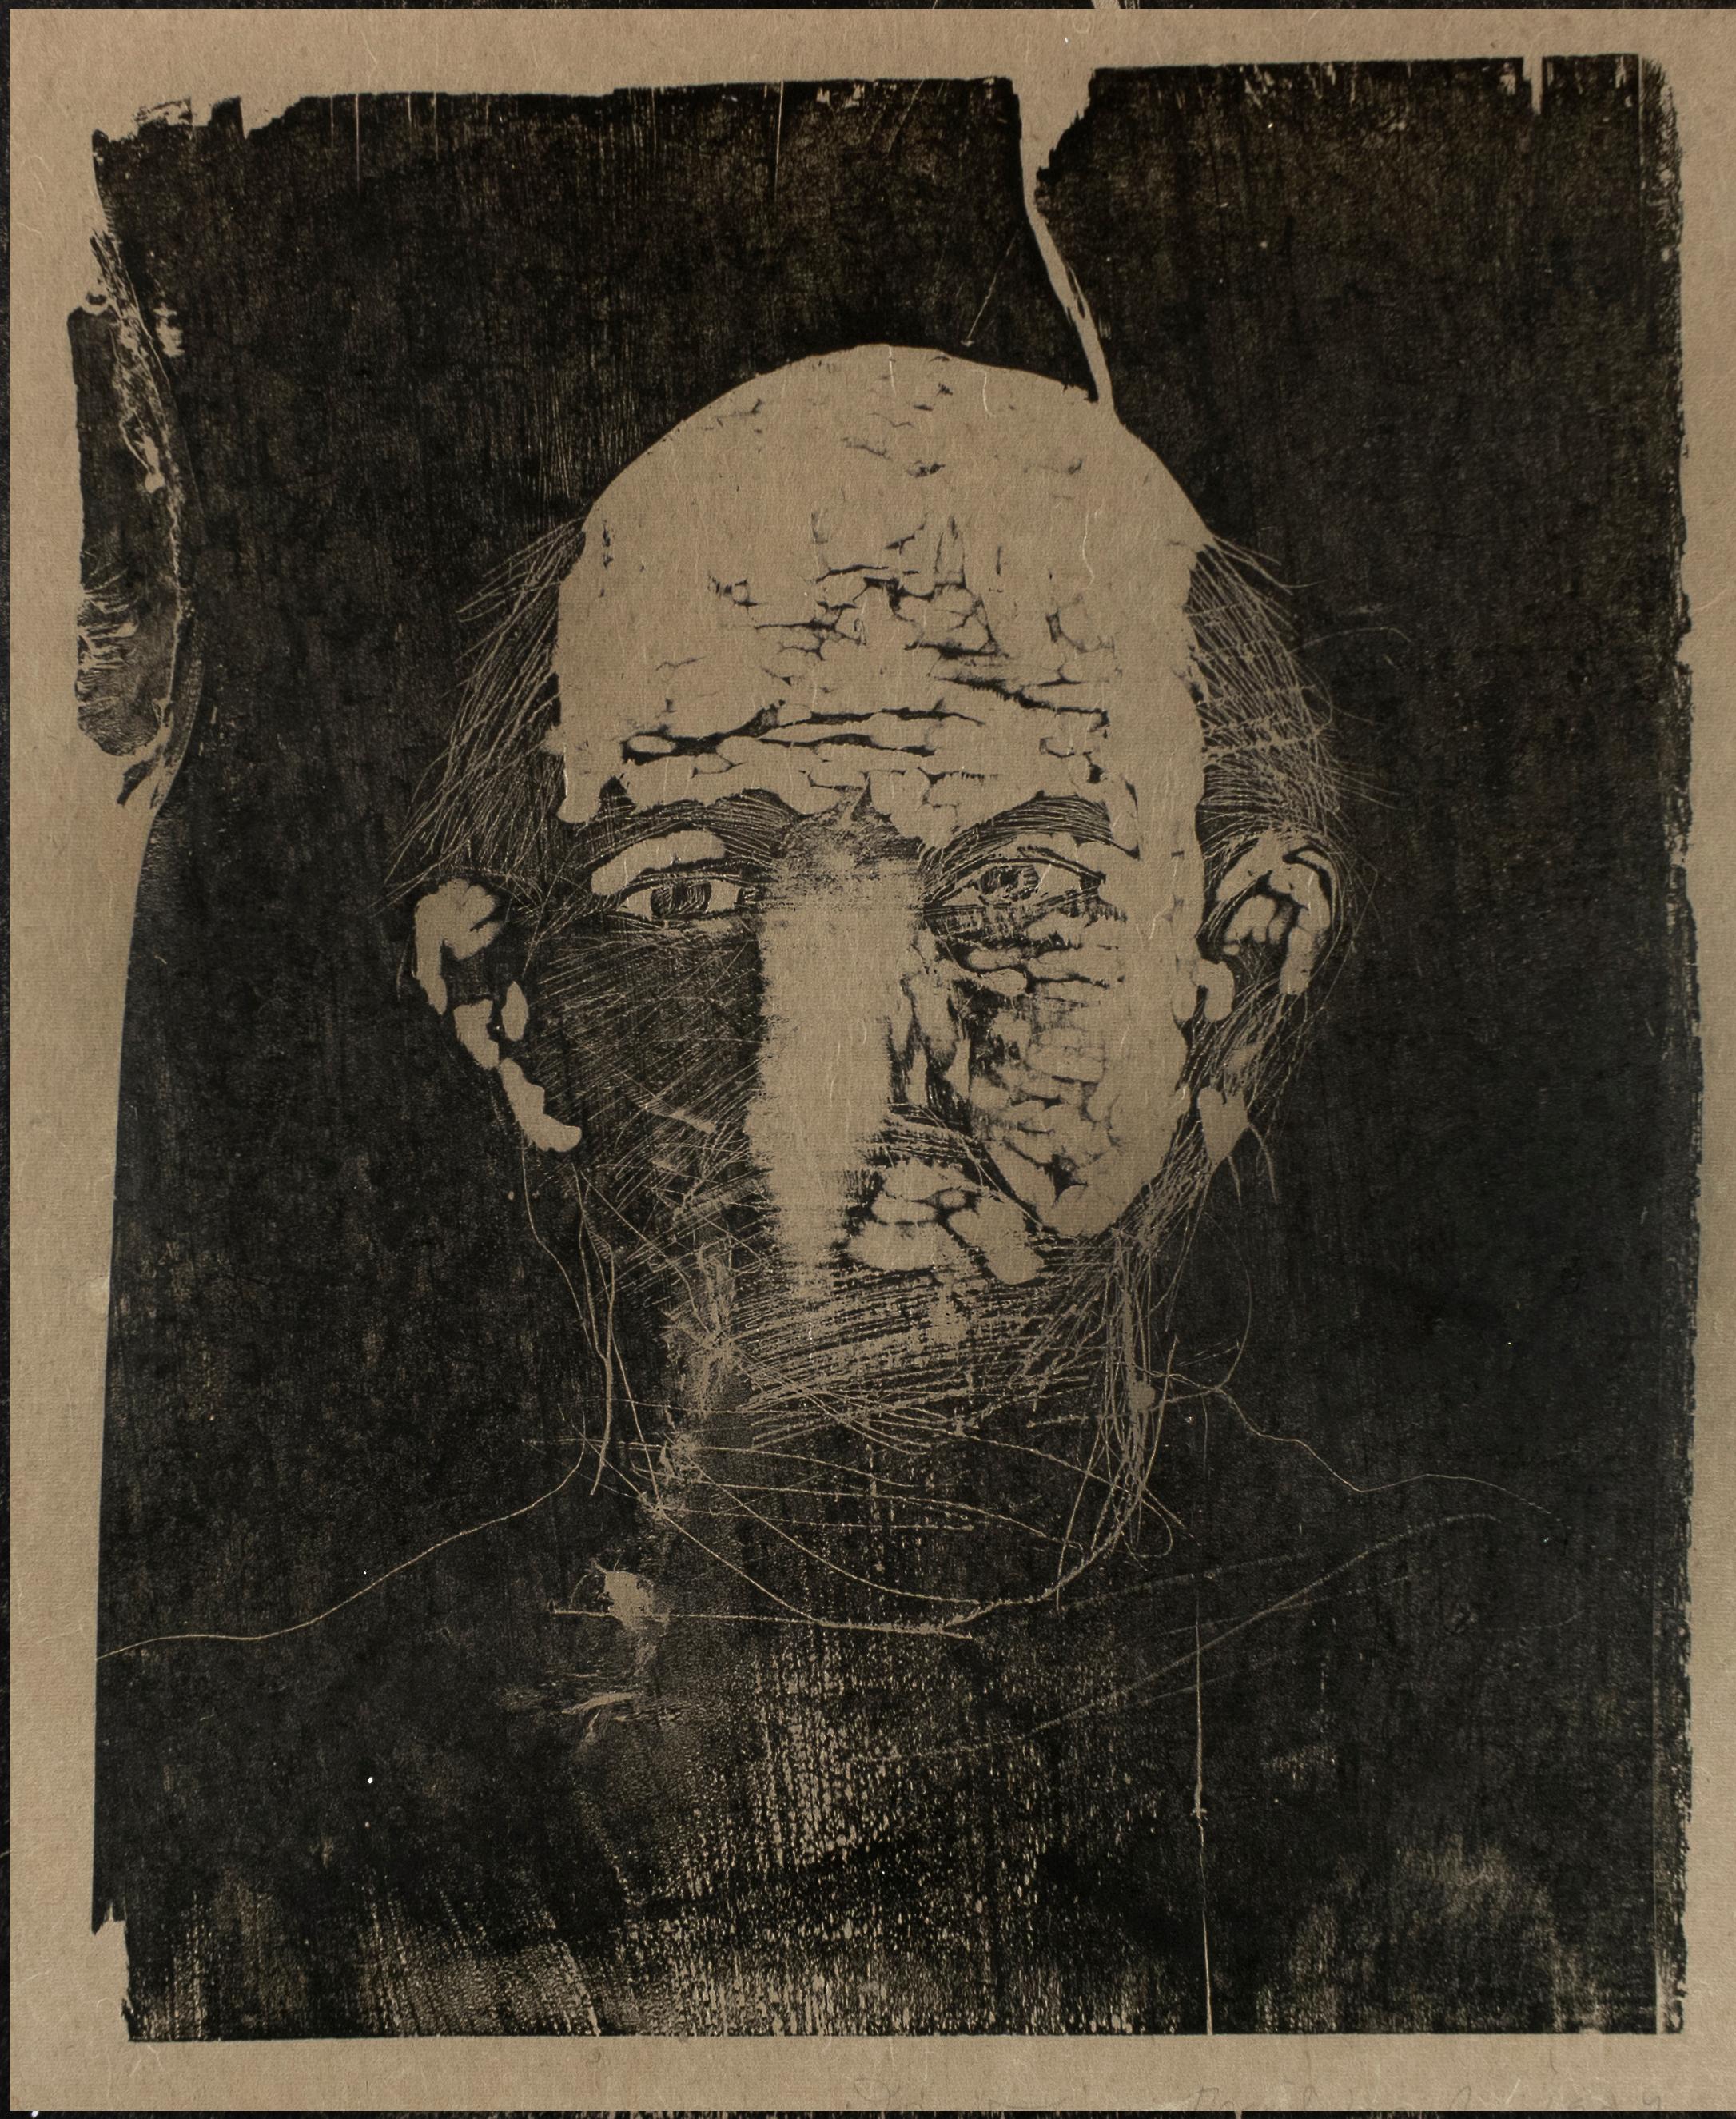 Woodcut Self Portrait (unique state proof) - Print by Jim Dine